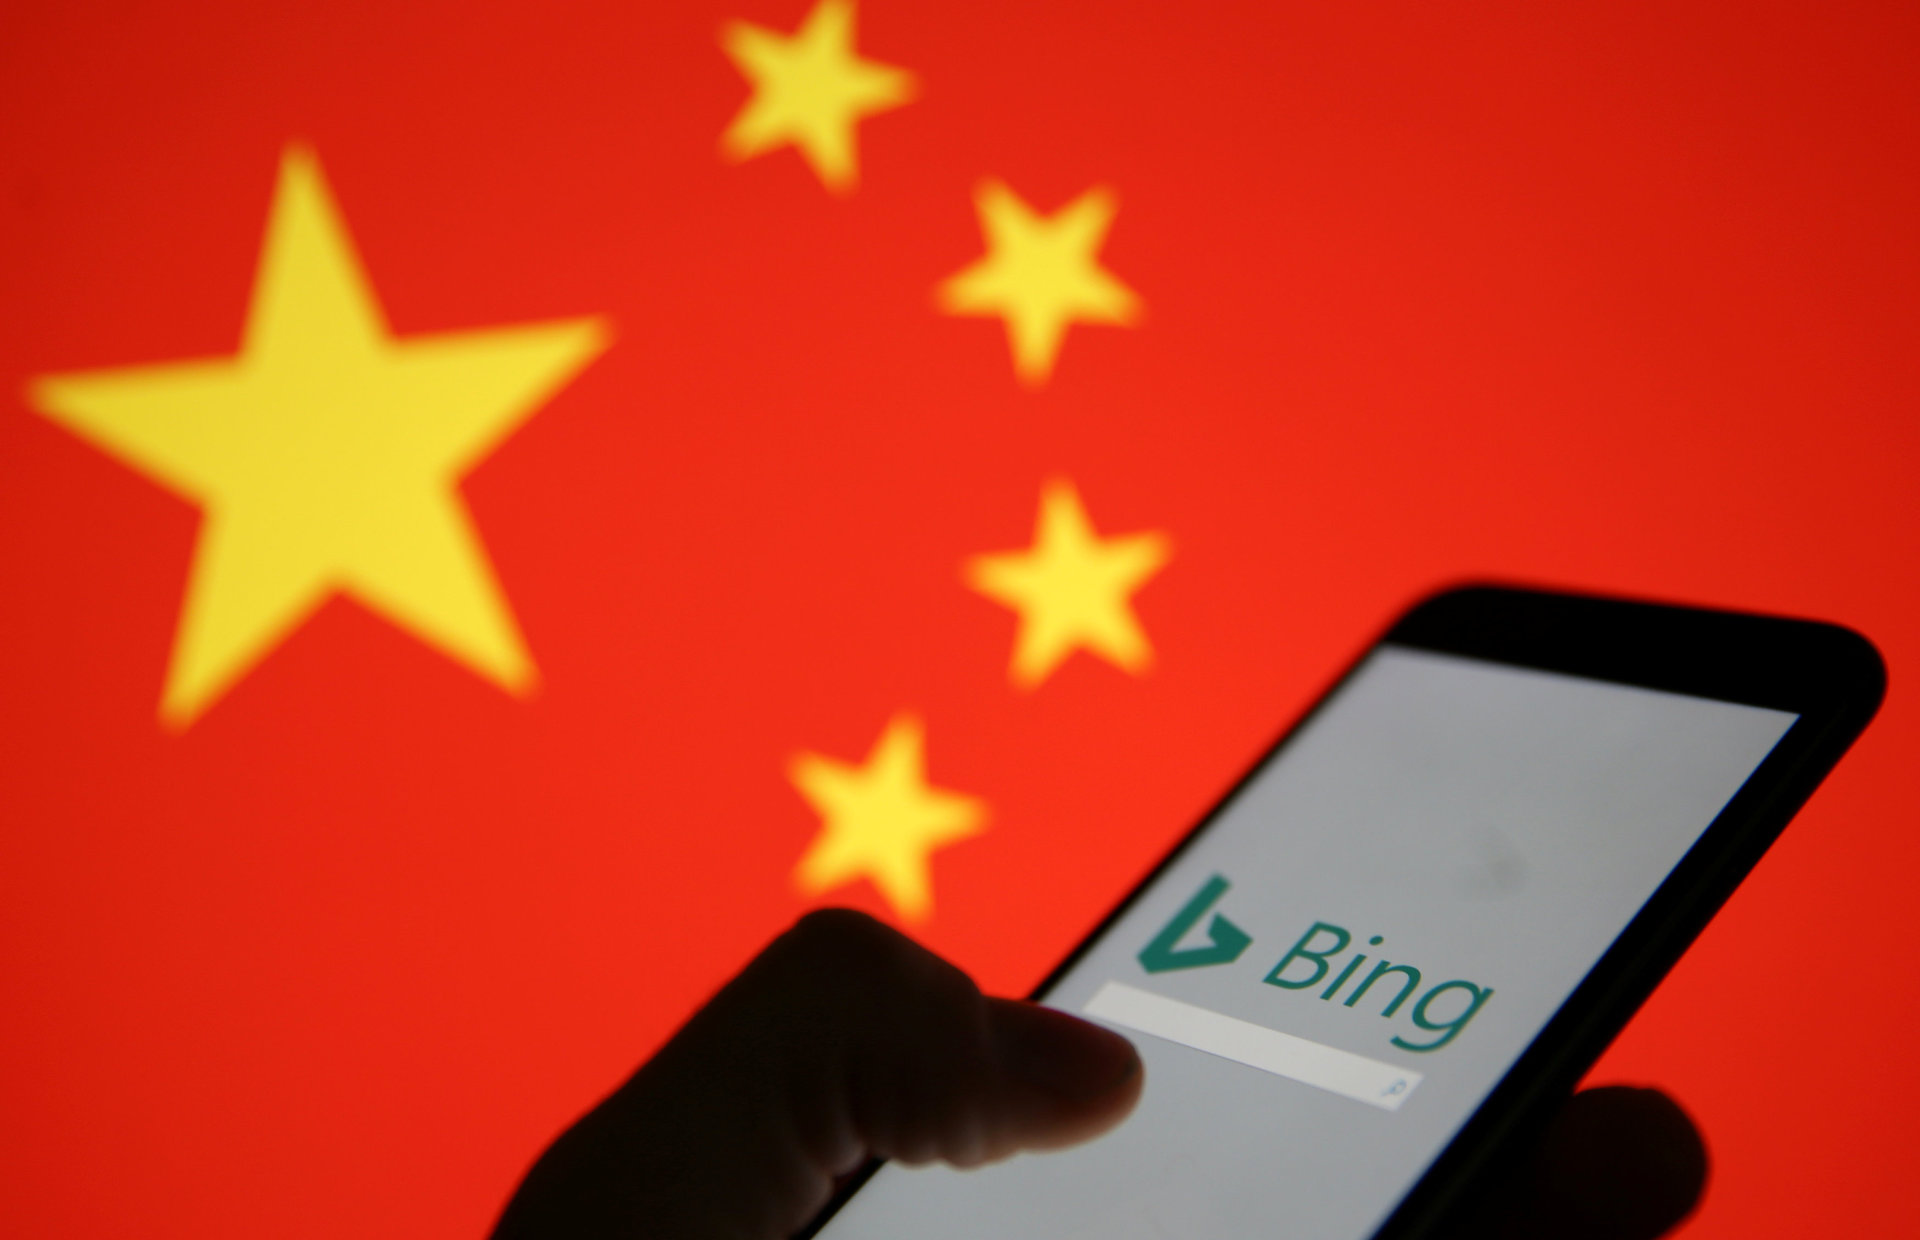 China-Bing Censorship